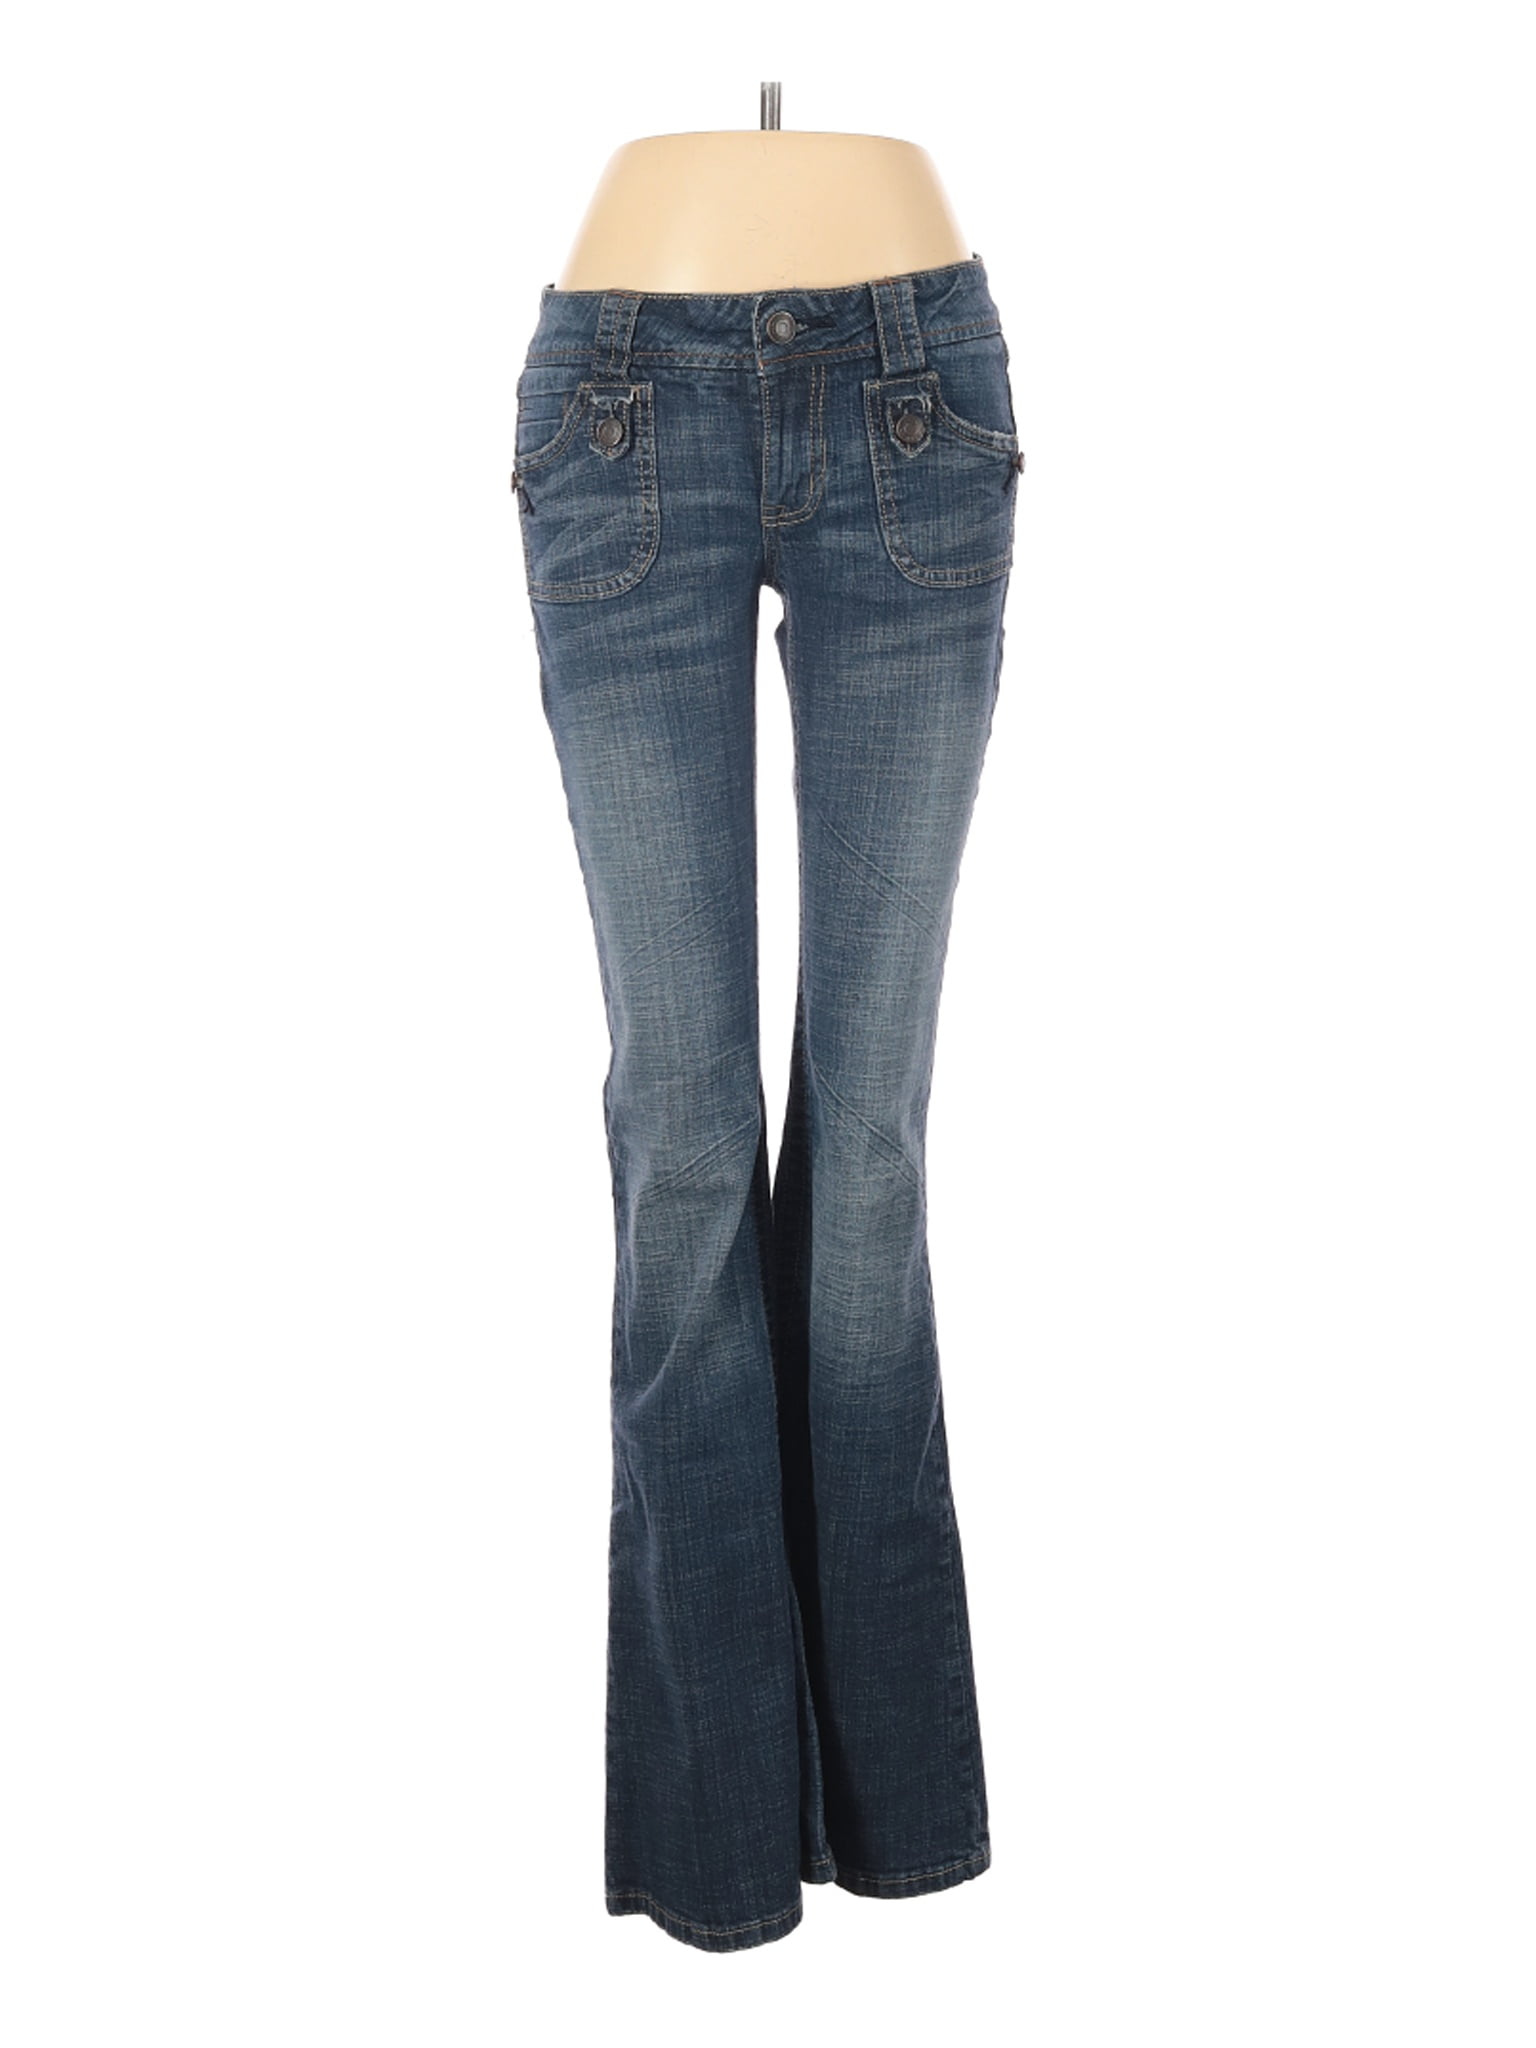 hydraulic jeans price